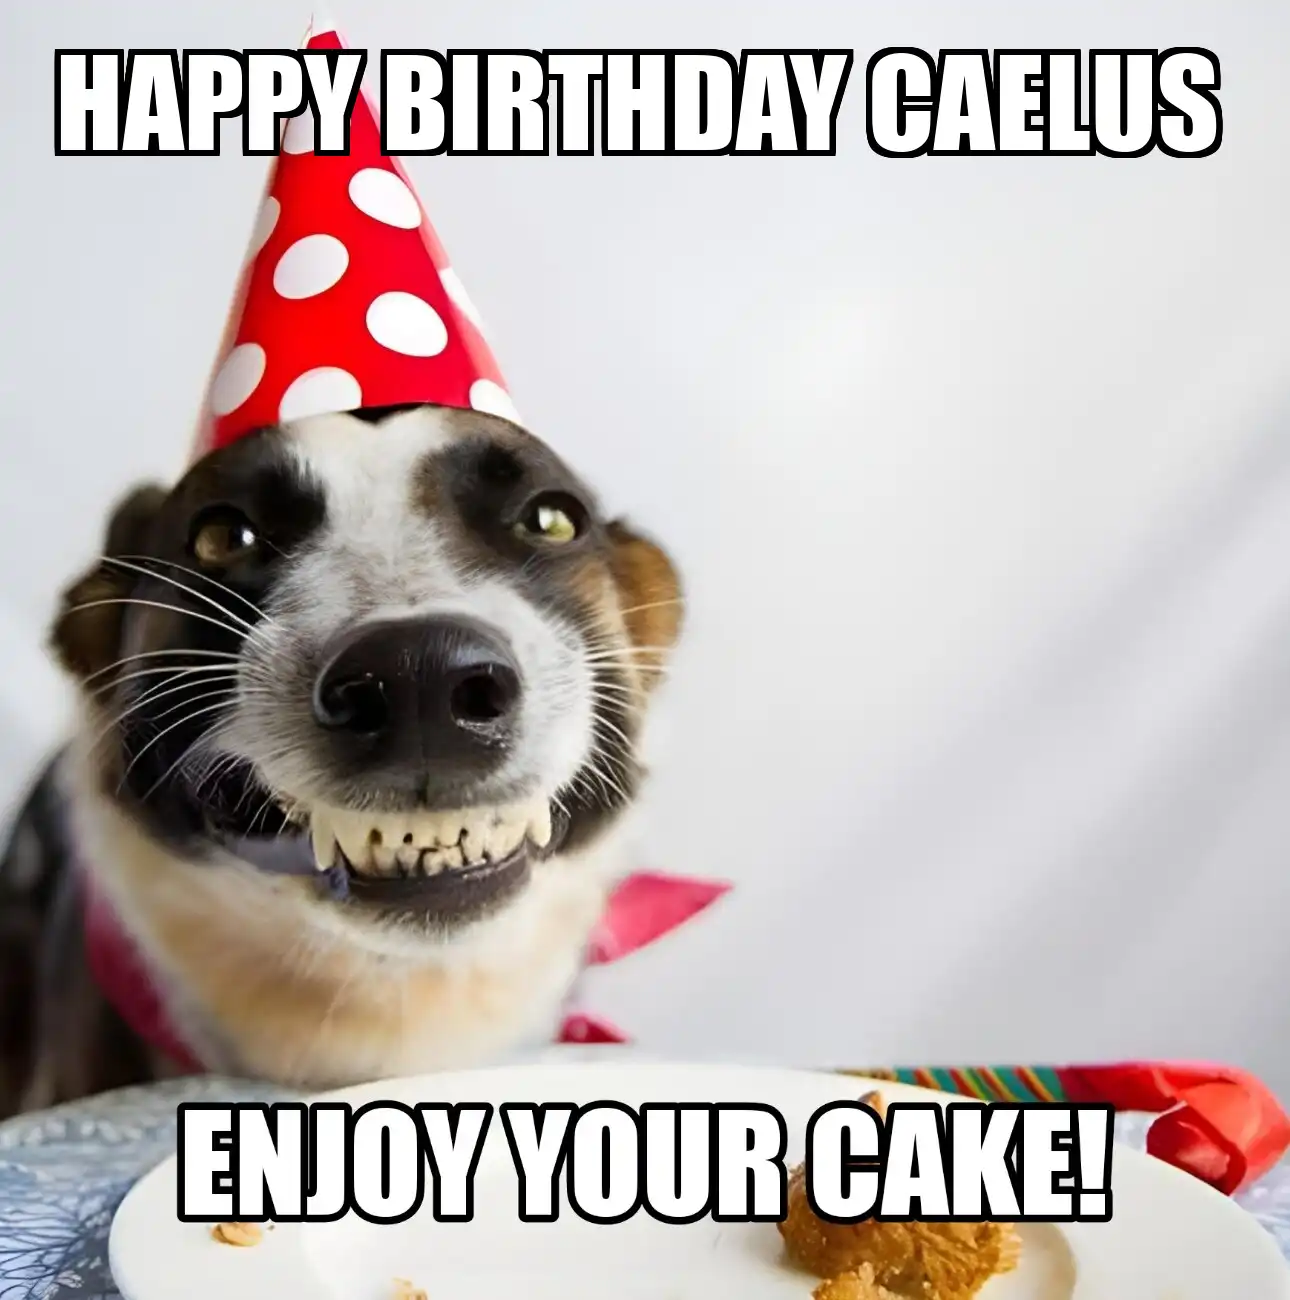 Happy Birthday Caelus Enjoy Your Cake Dog Meme